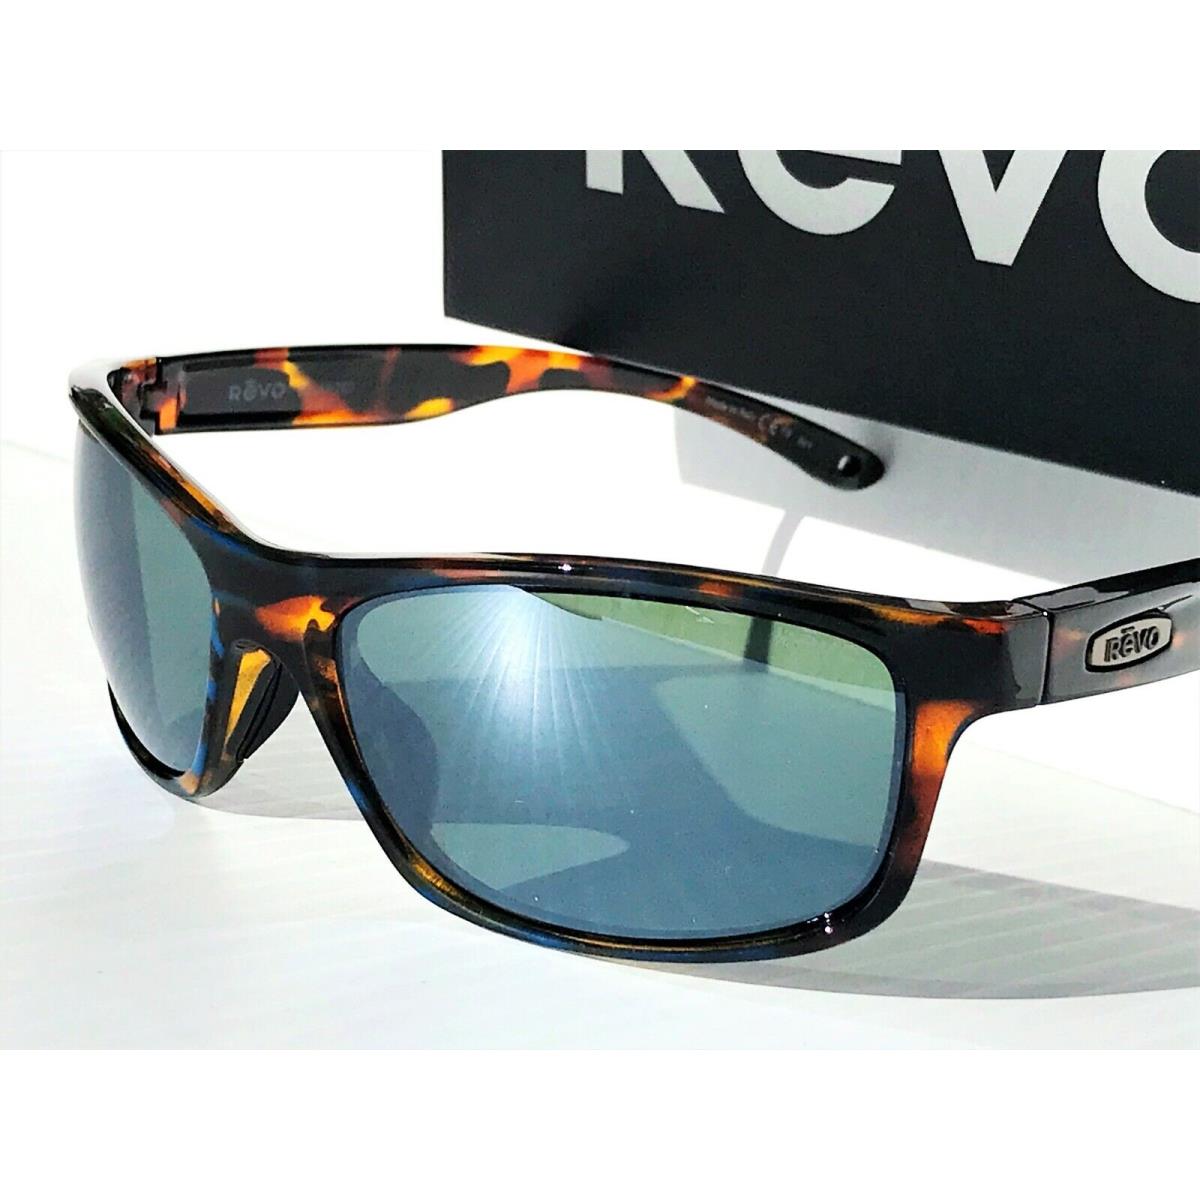 Revo sunglasses Harness - Blue Frame, Green Lens